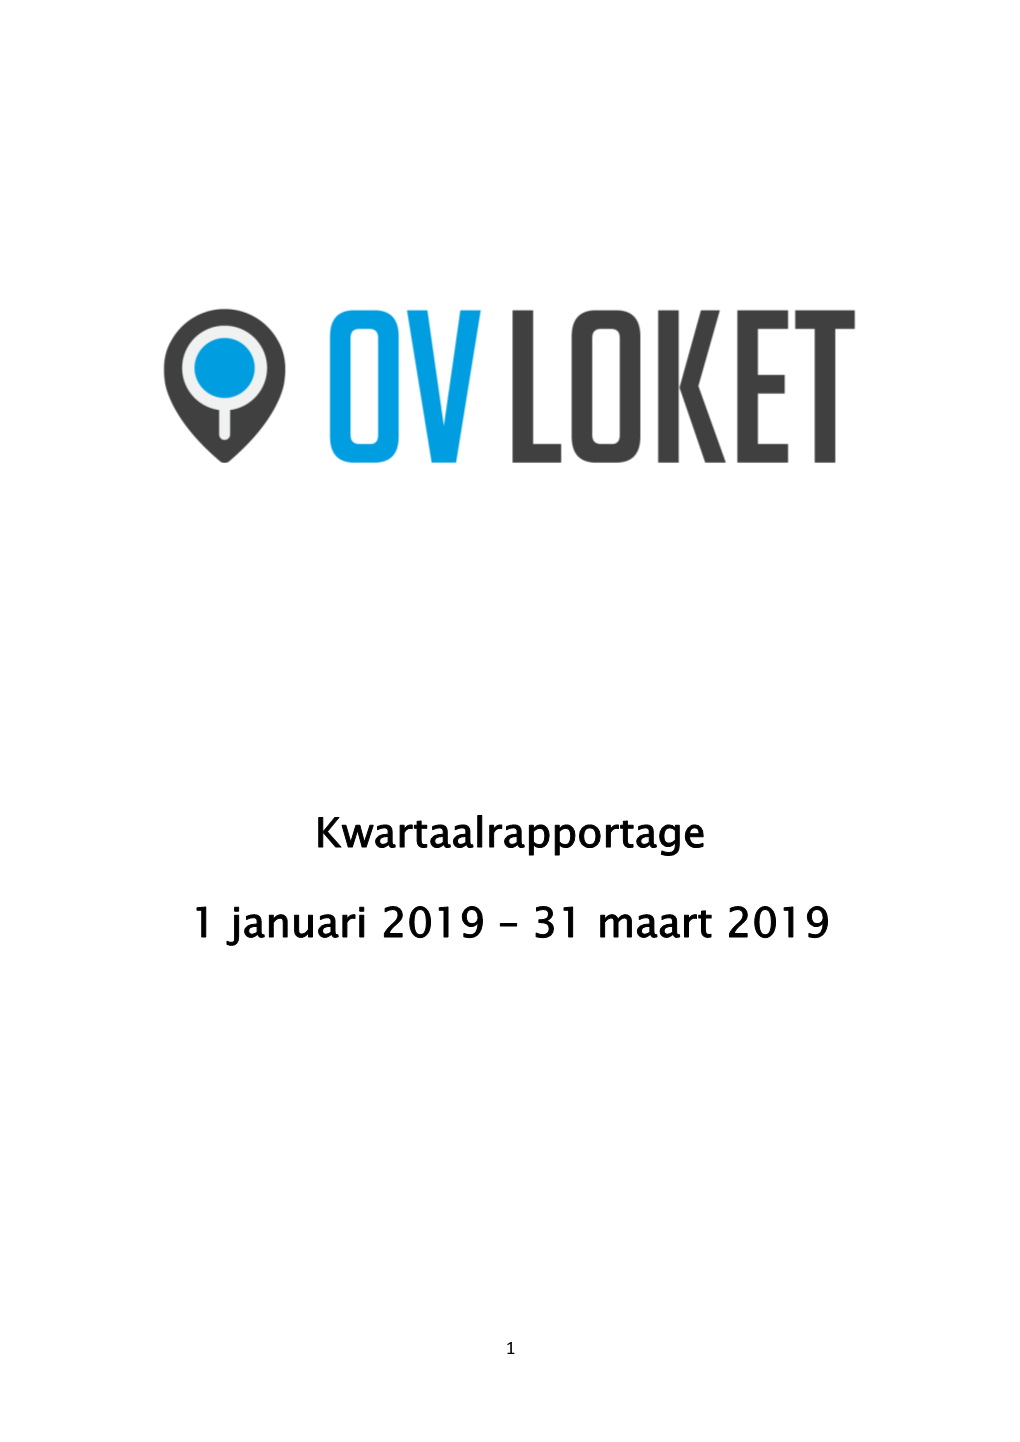 Kwartaalrapportage OV Loket Eerste Kwartaal 2019